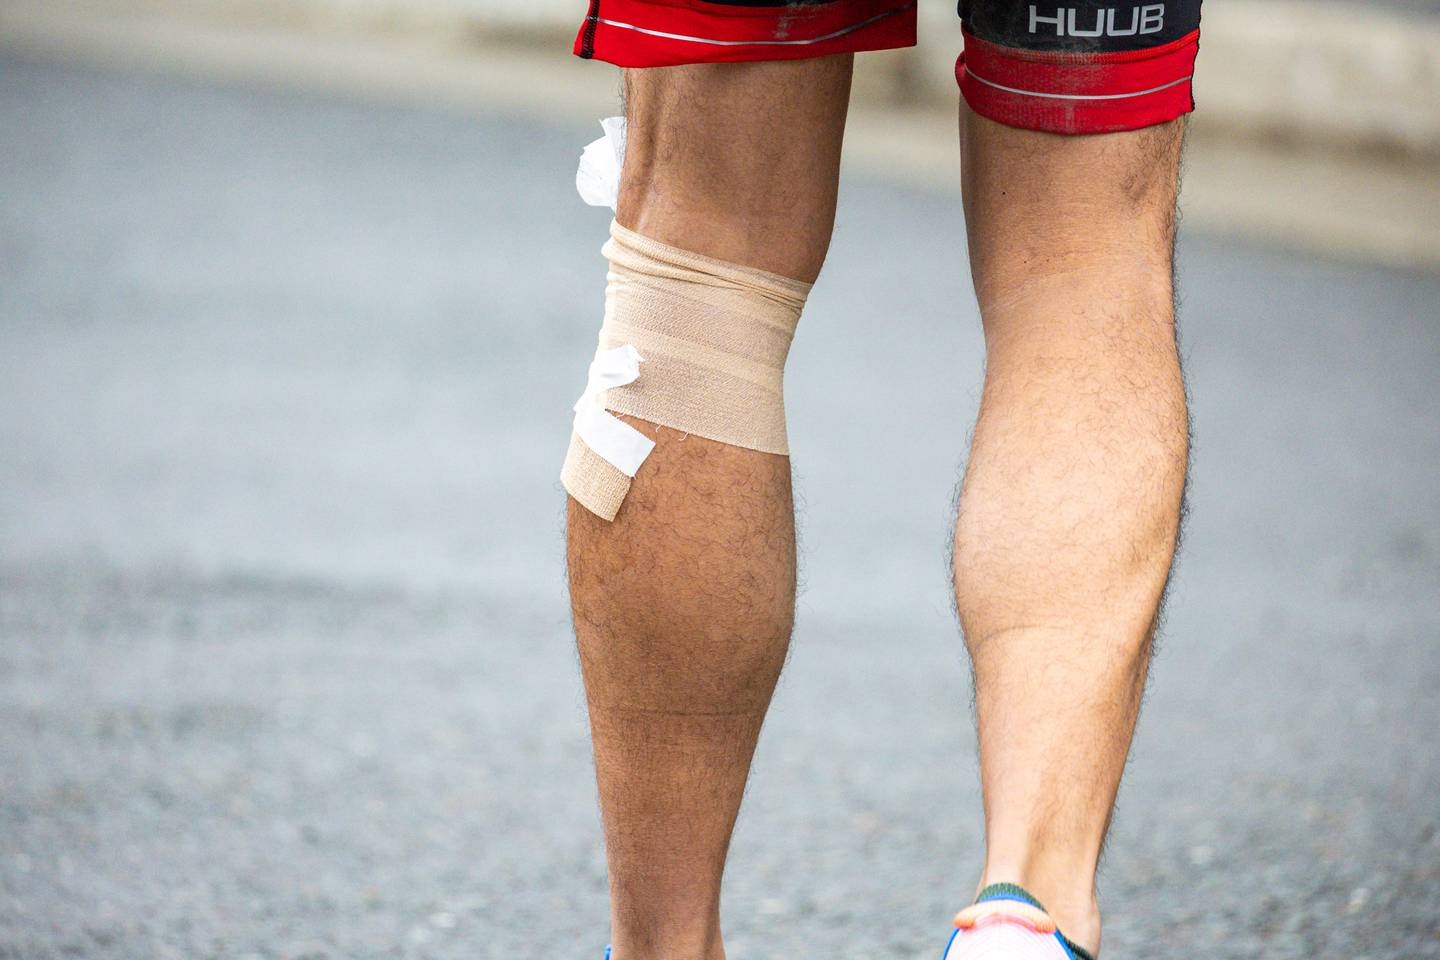 Injuries were inevitable during the Ironman Alaska race